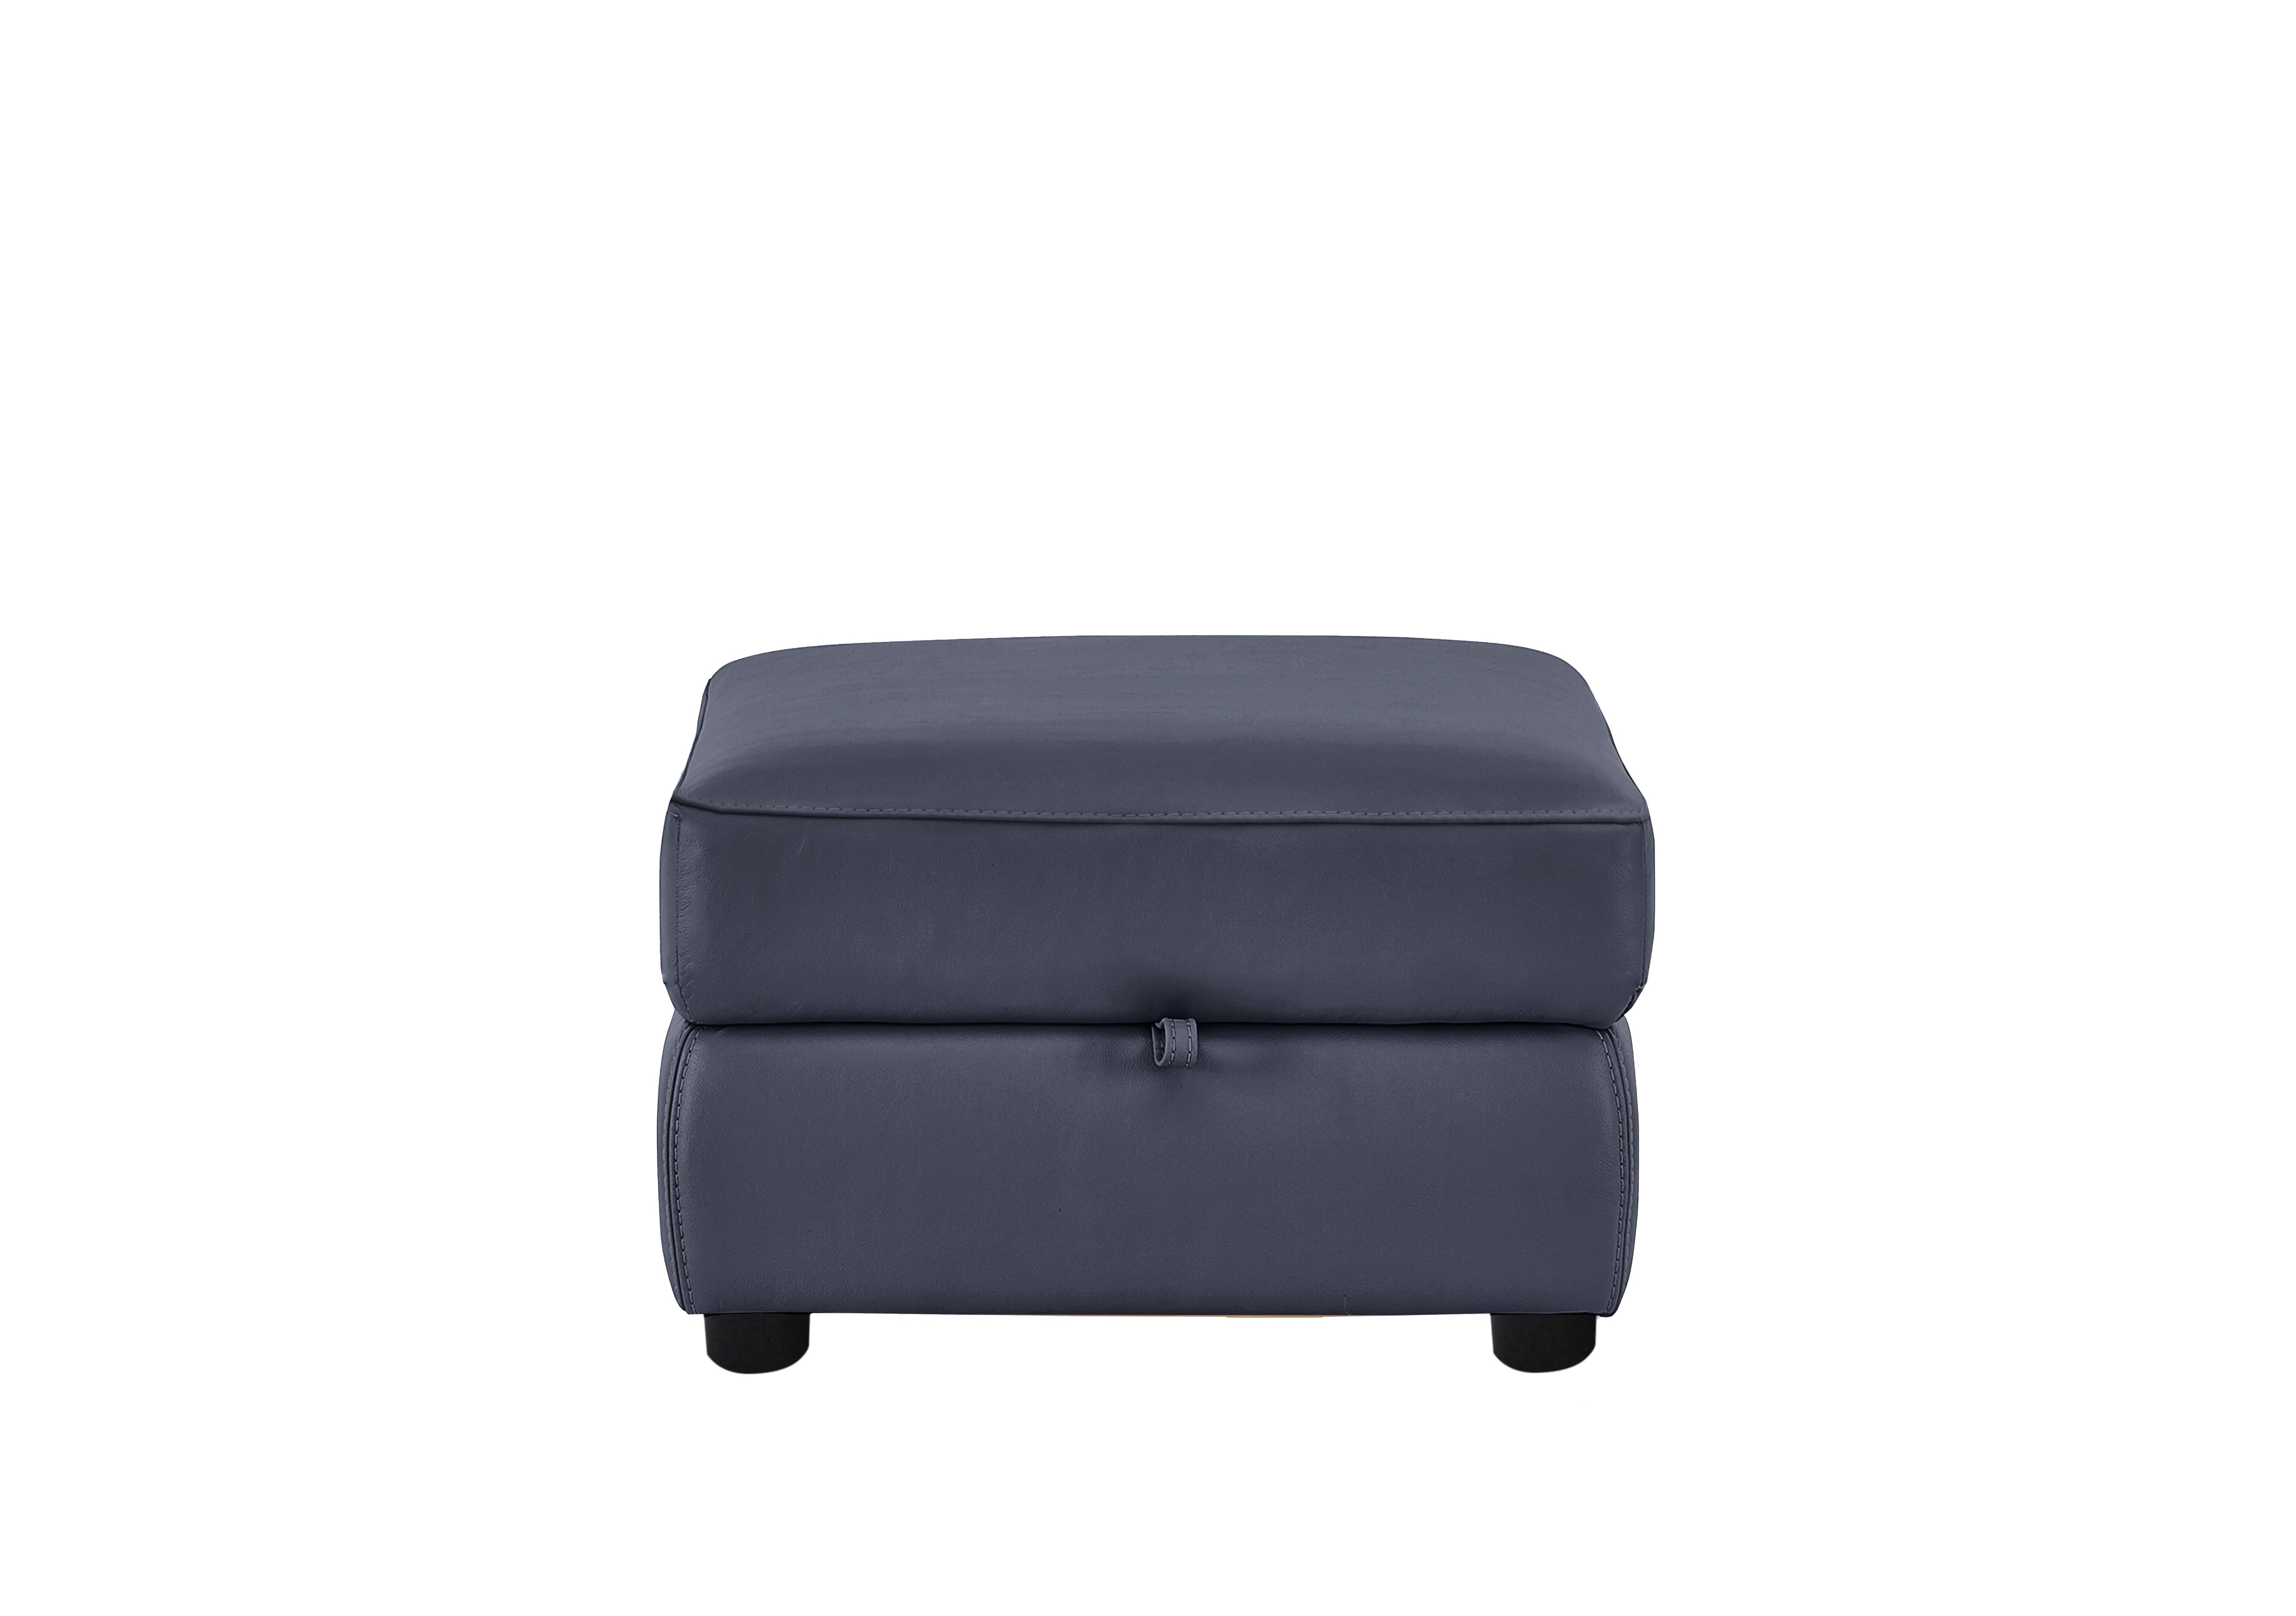 Snug Leather Storage Footstool in Bv-313e Ocean Blue on Furniture Village